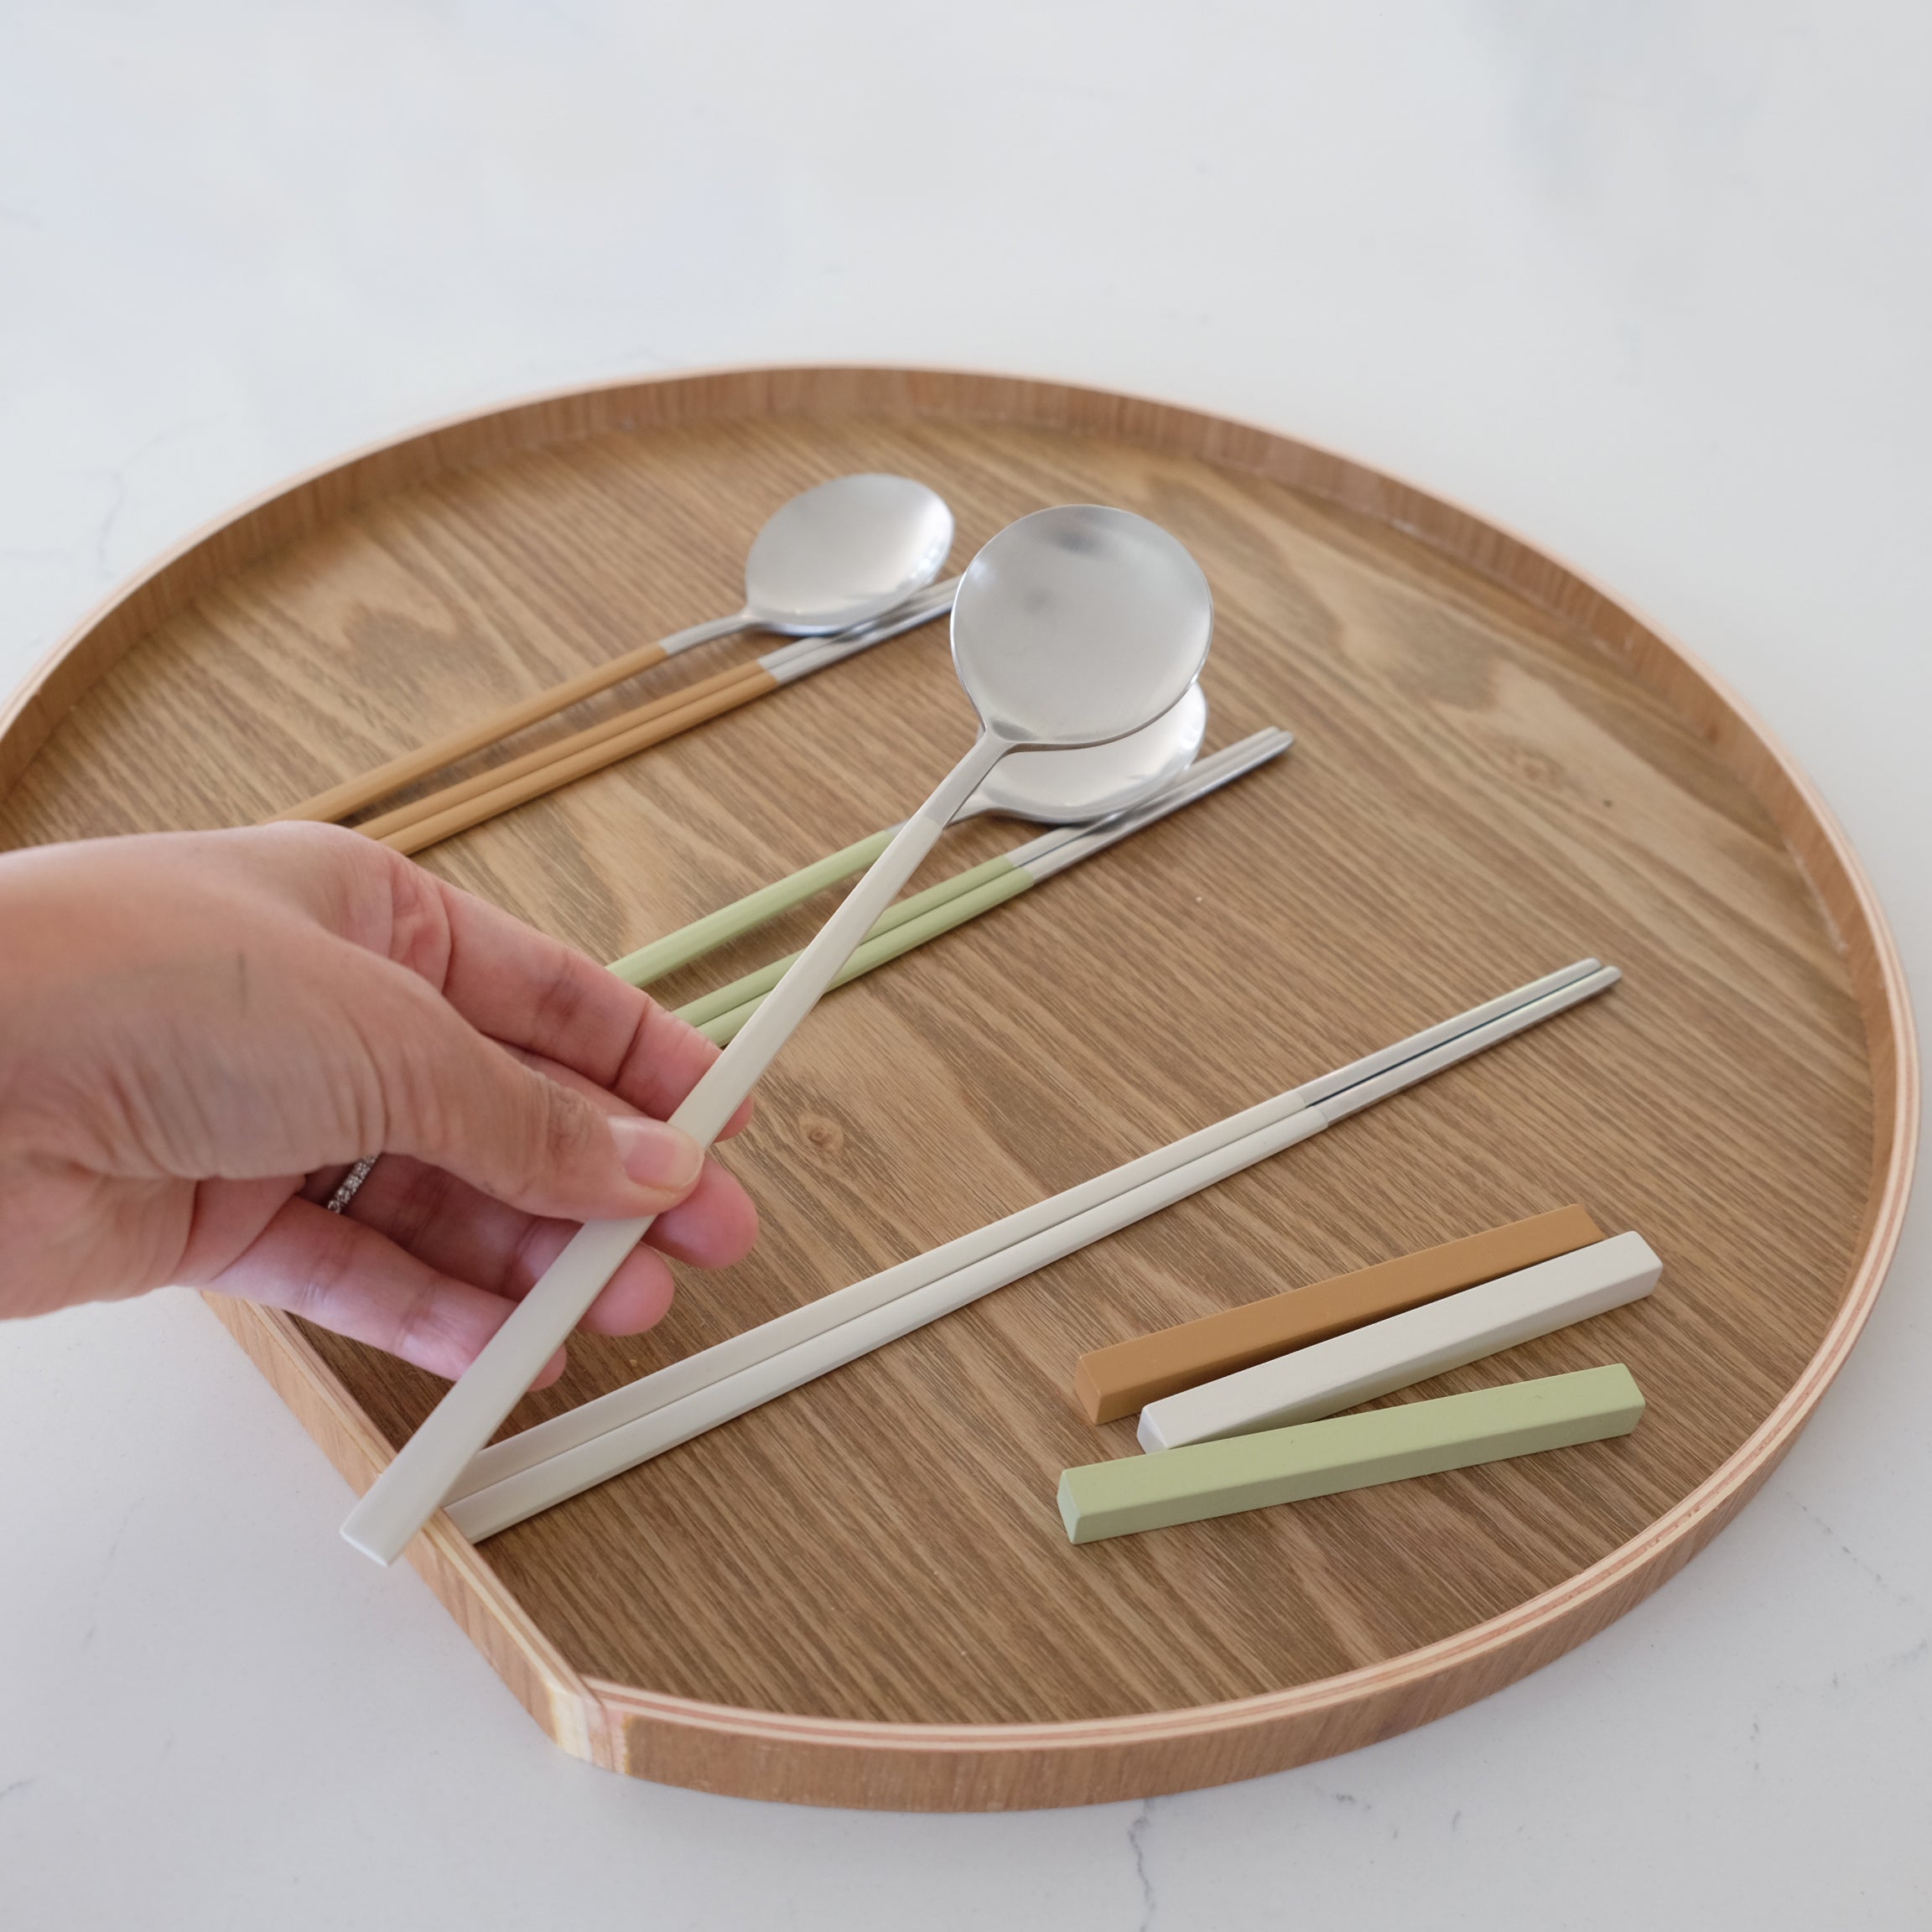 Pantone Korean Spoon and Chopsticks